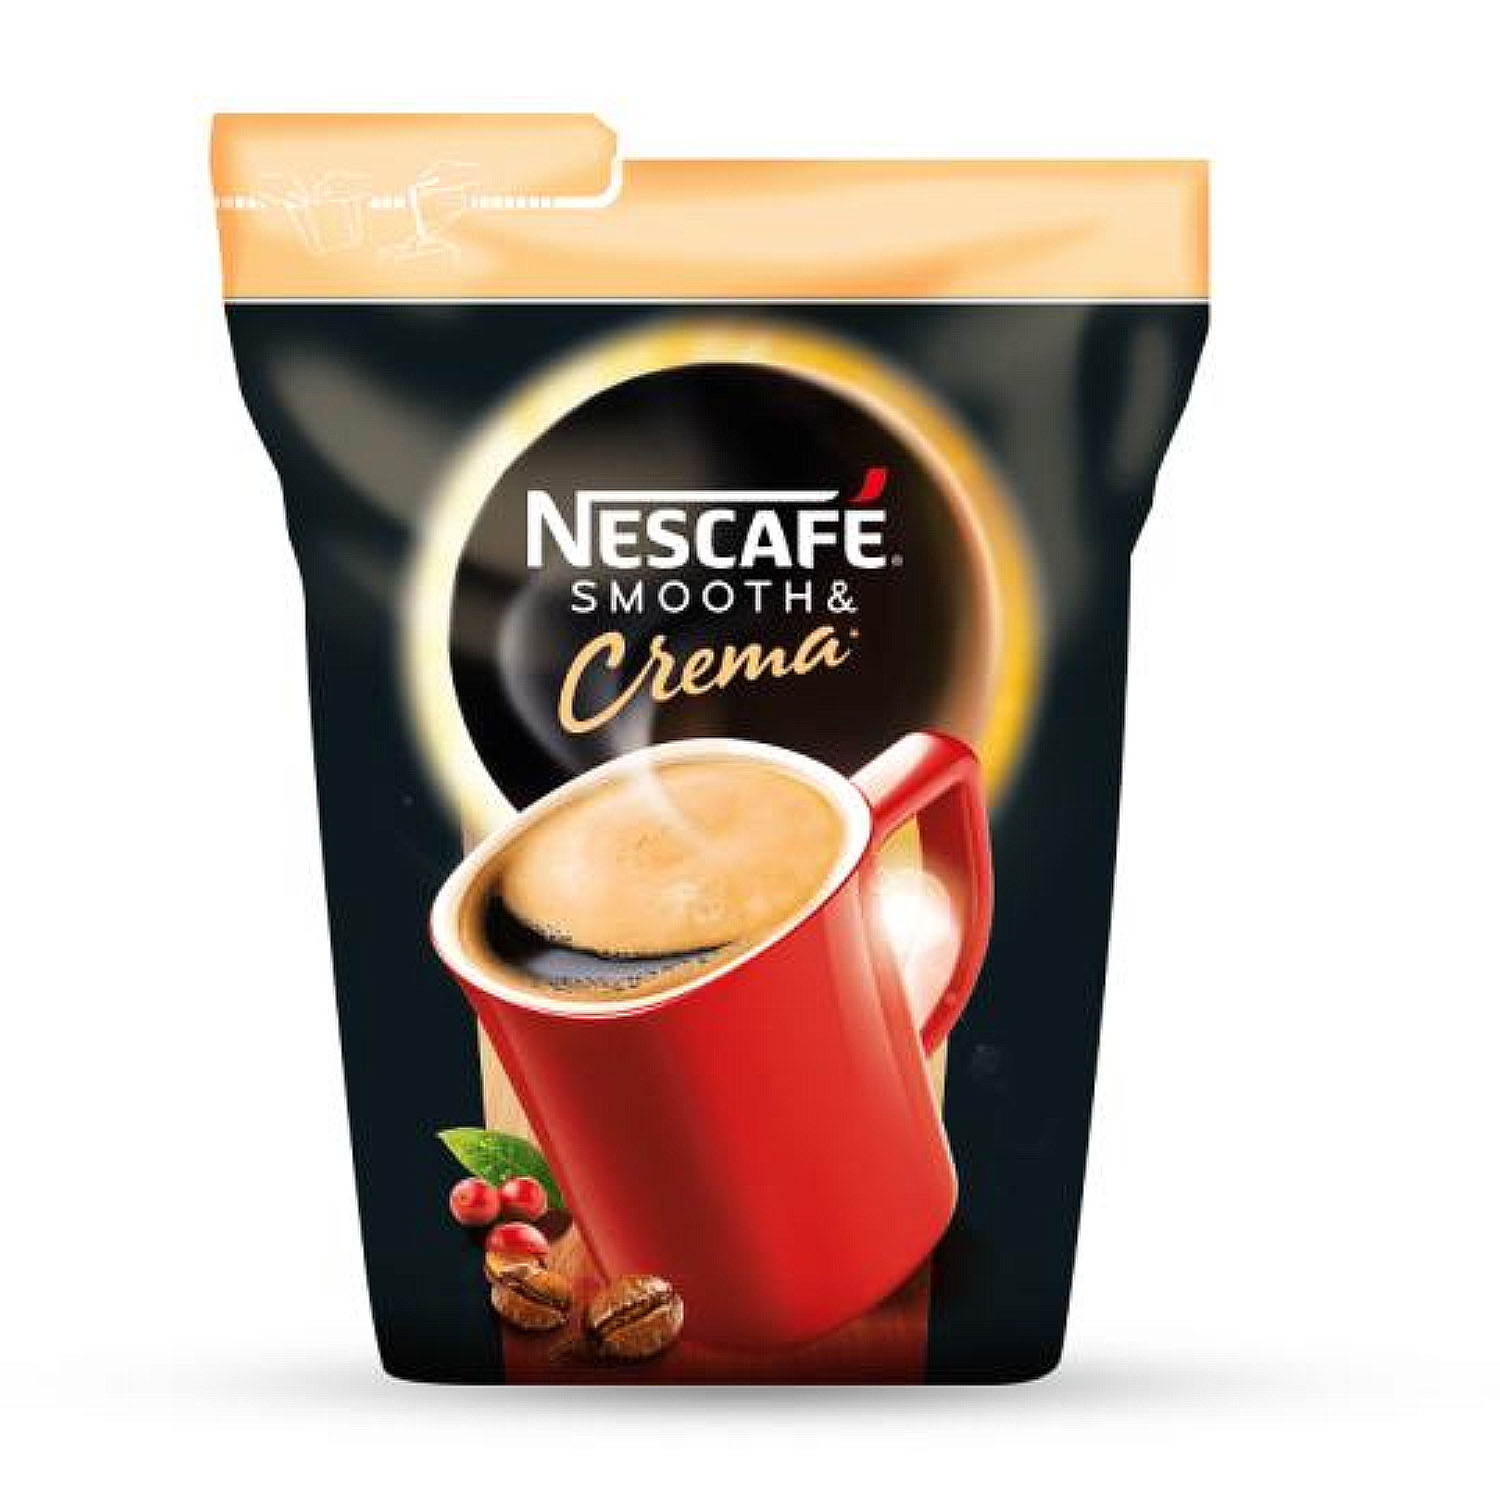 Nescafe Smooth and Crema 500g